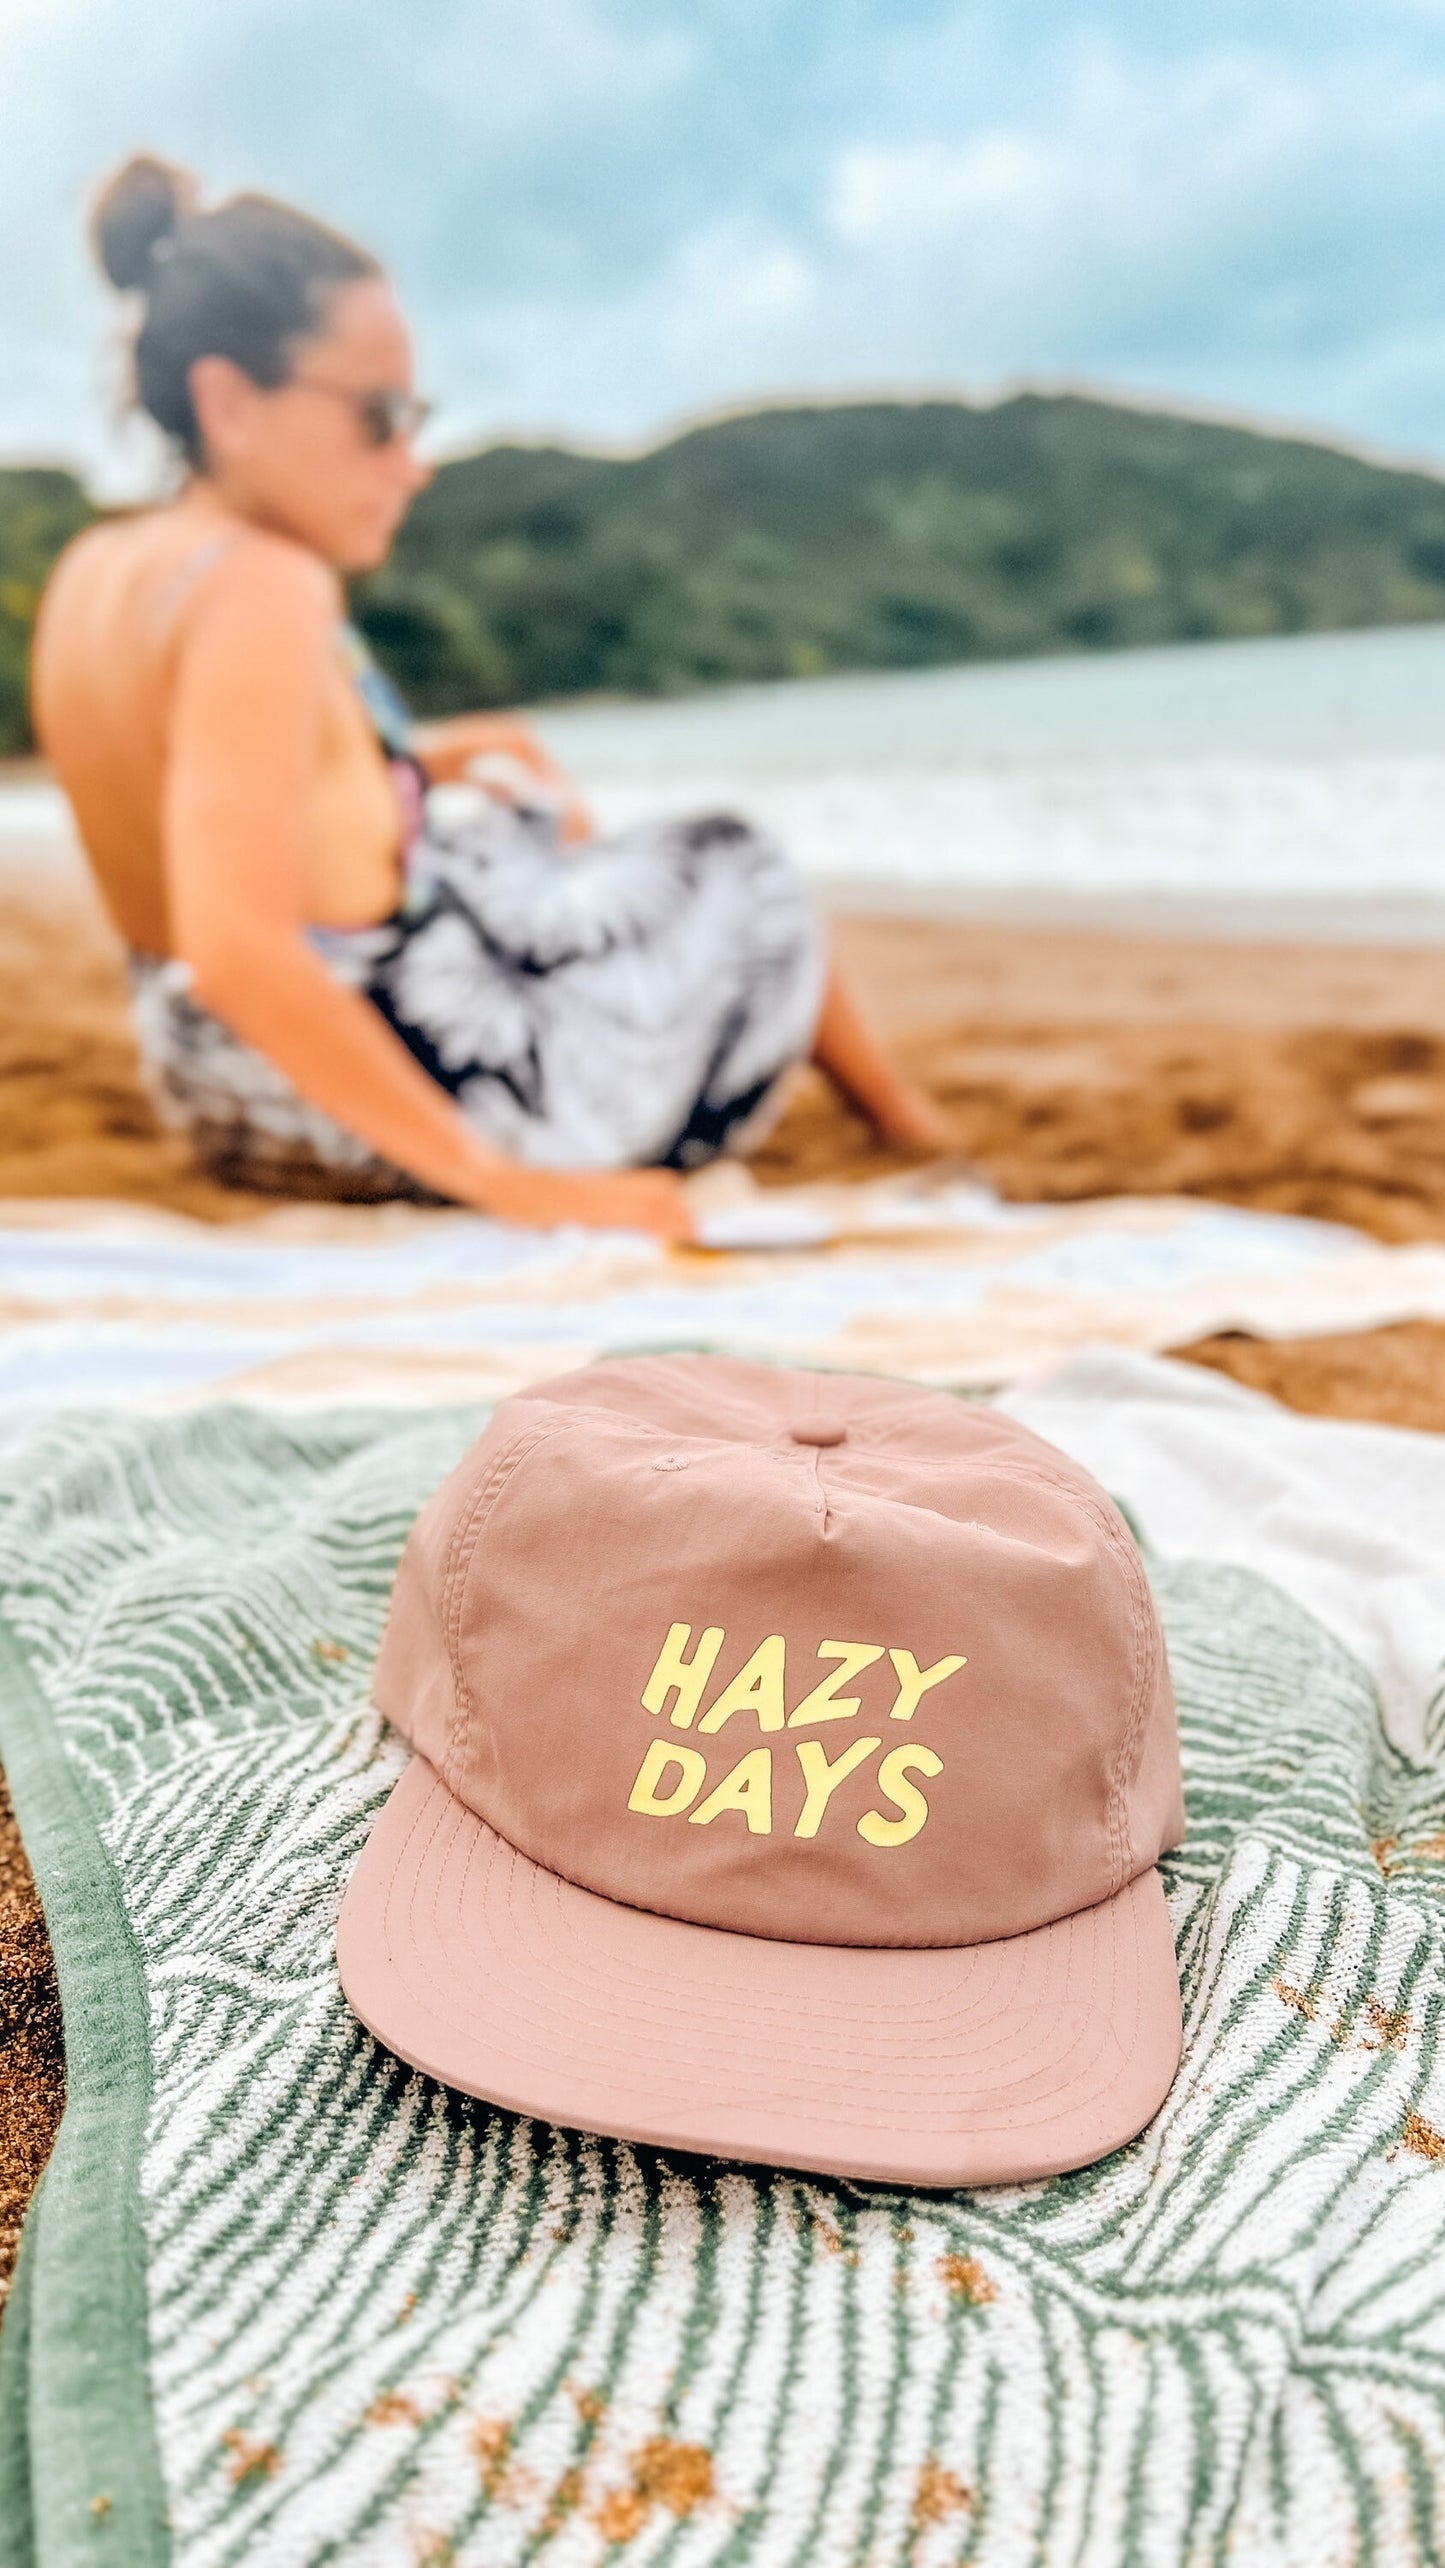 Hazy Days Quick-dry outdoor Cap